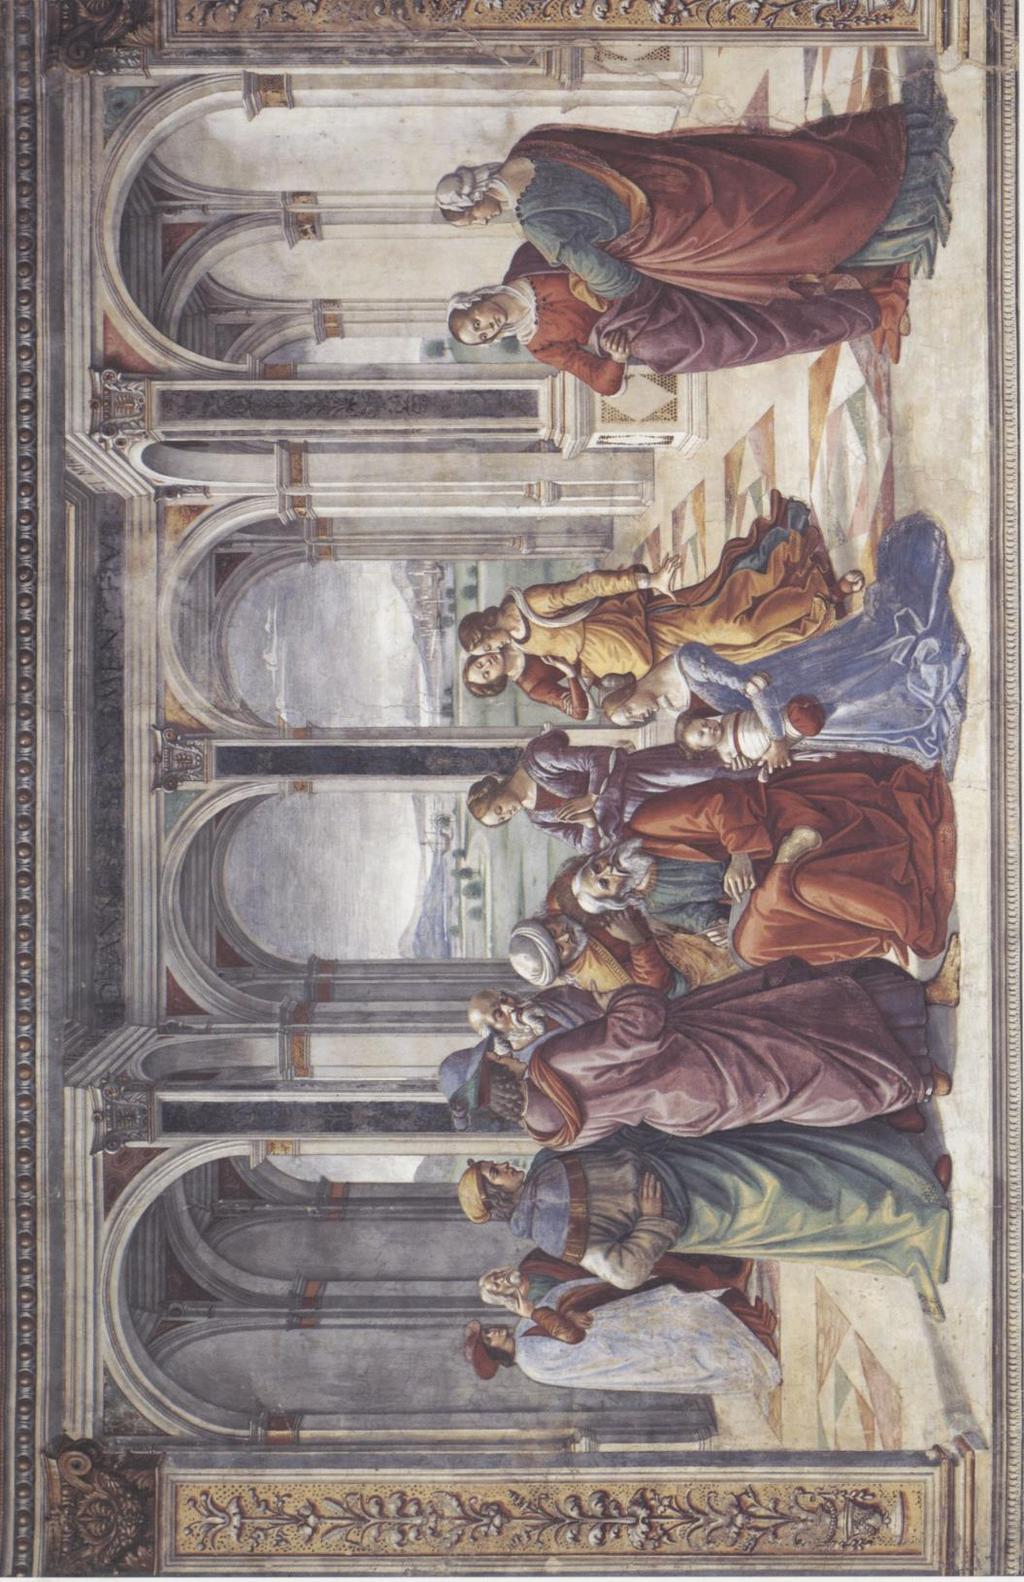 Plate 20: Domenico Bigordi called Ghirlandaio, and workshop, Naming of the Baptist,